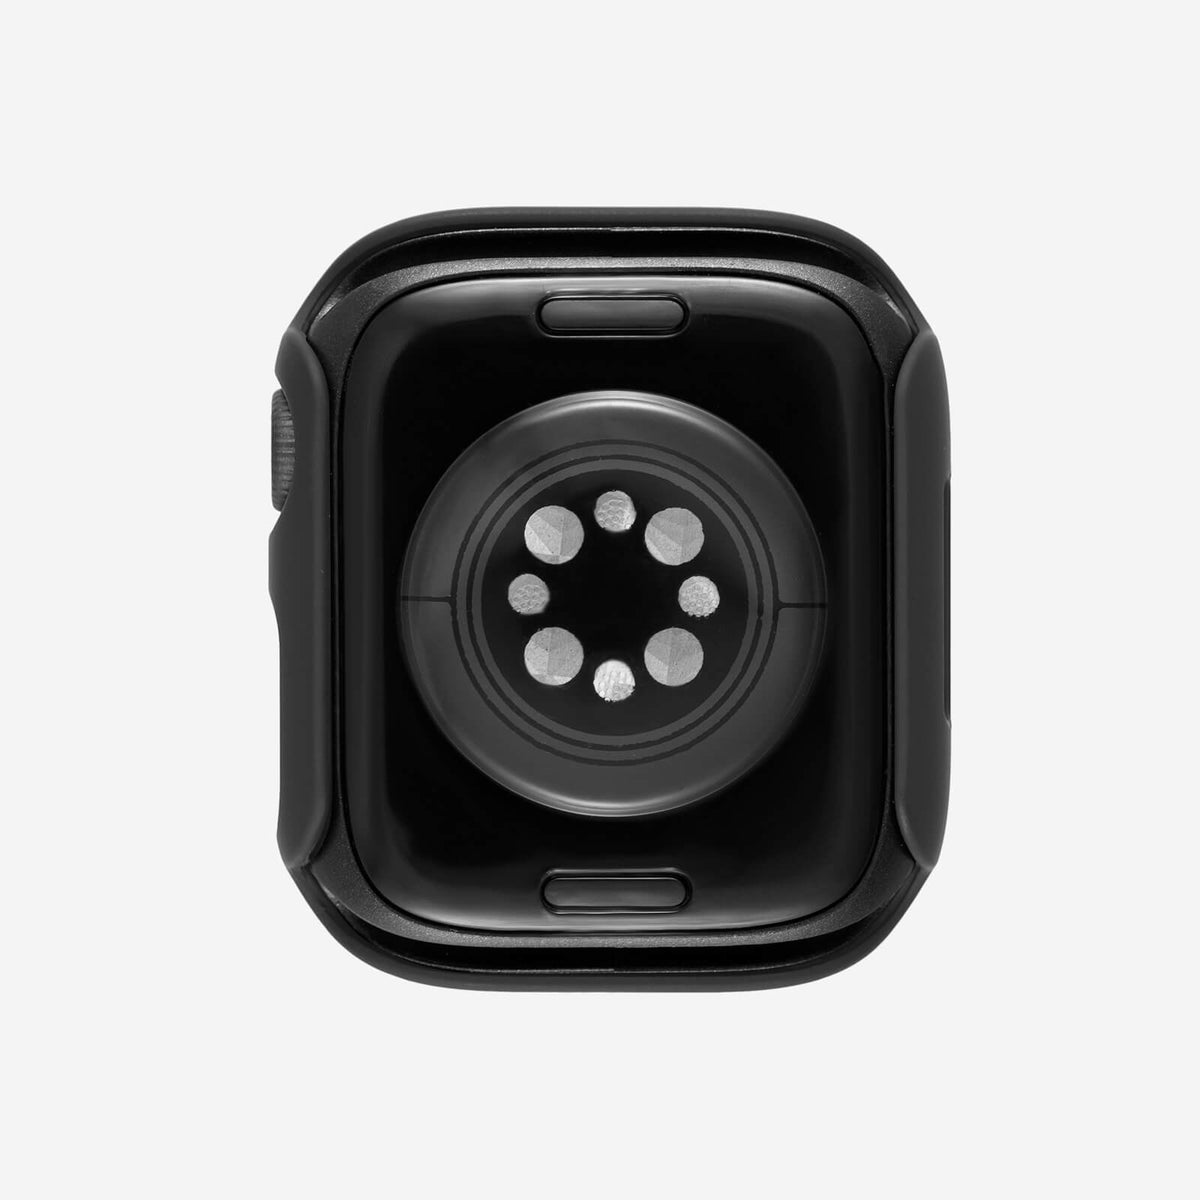 Apple Watch Slim Screen Protector Case - Matte Black